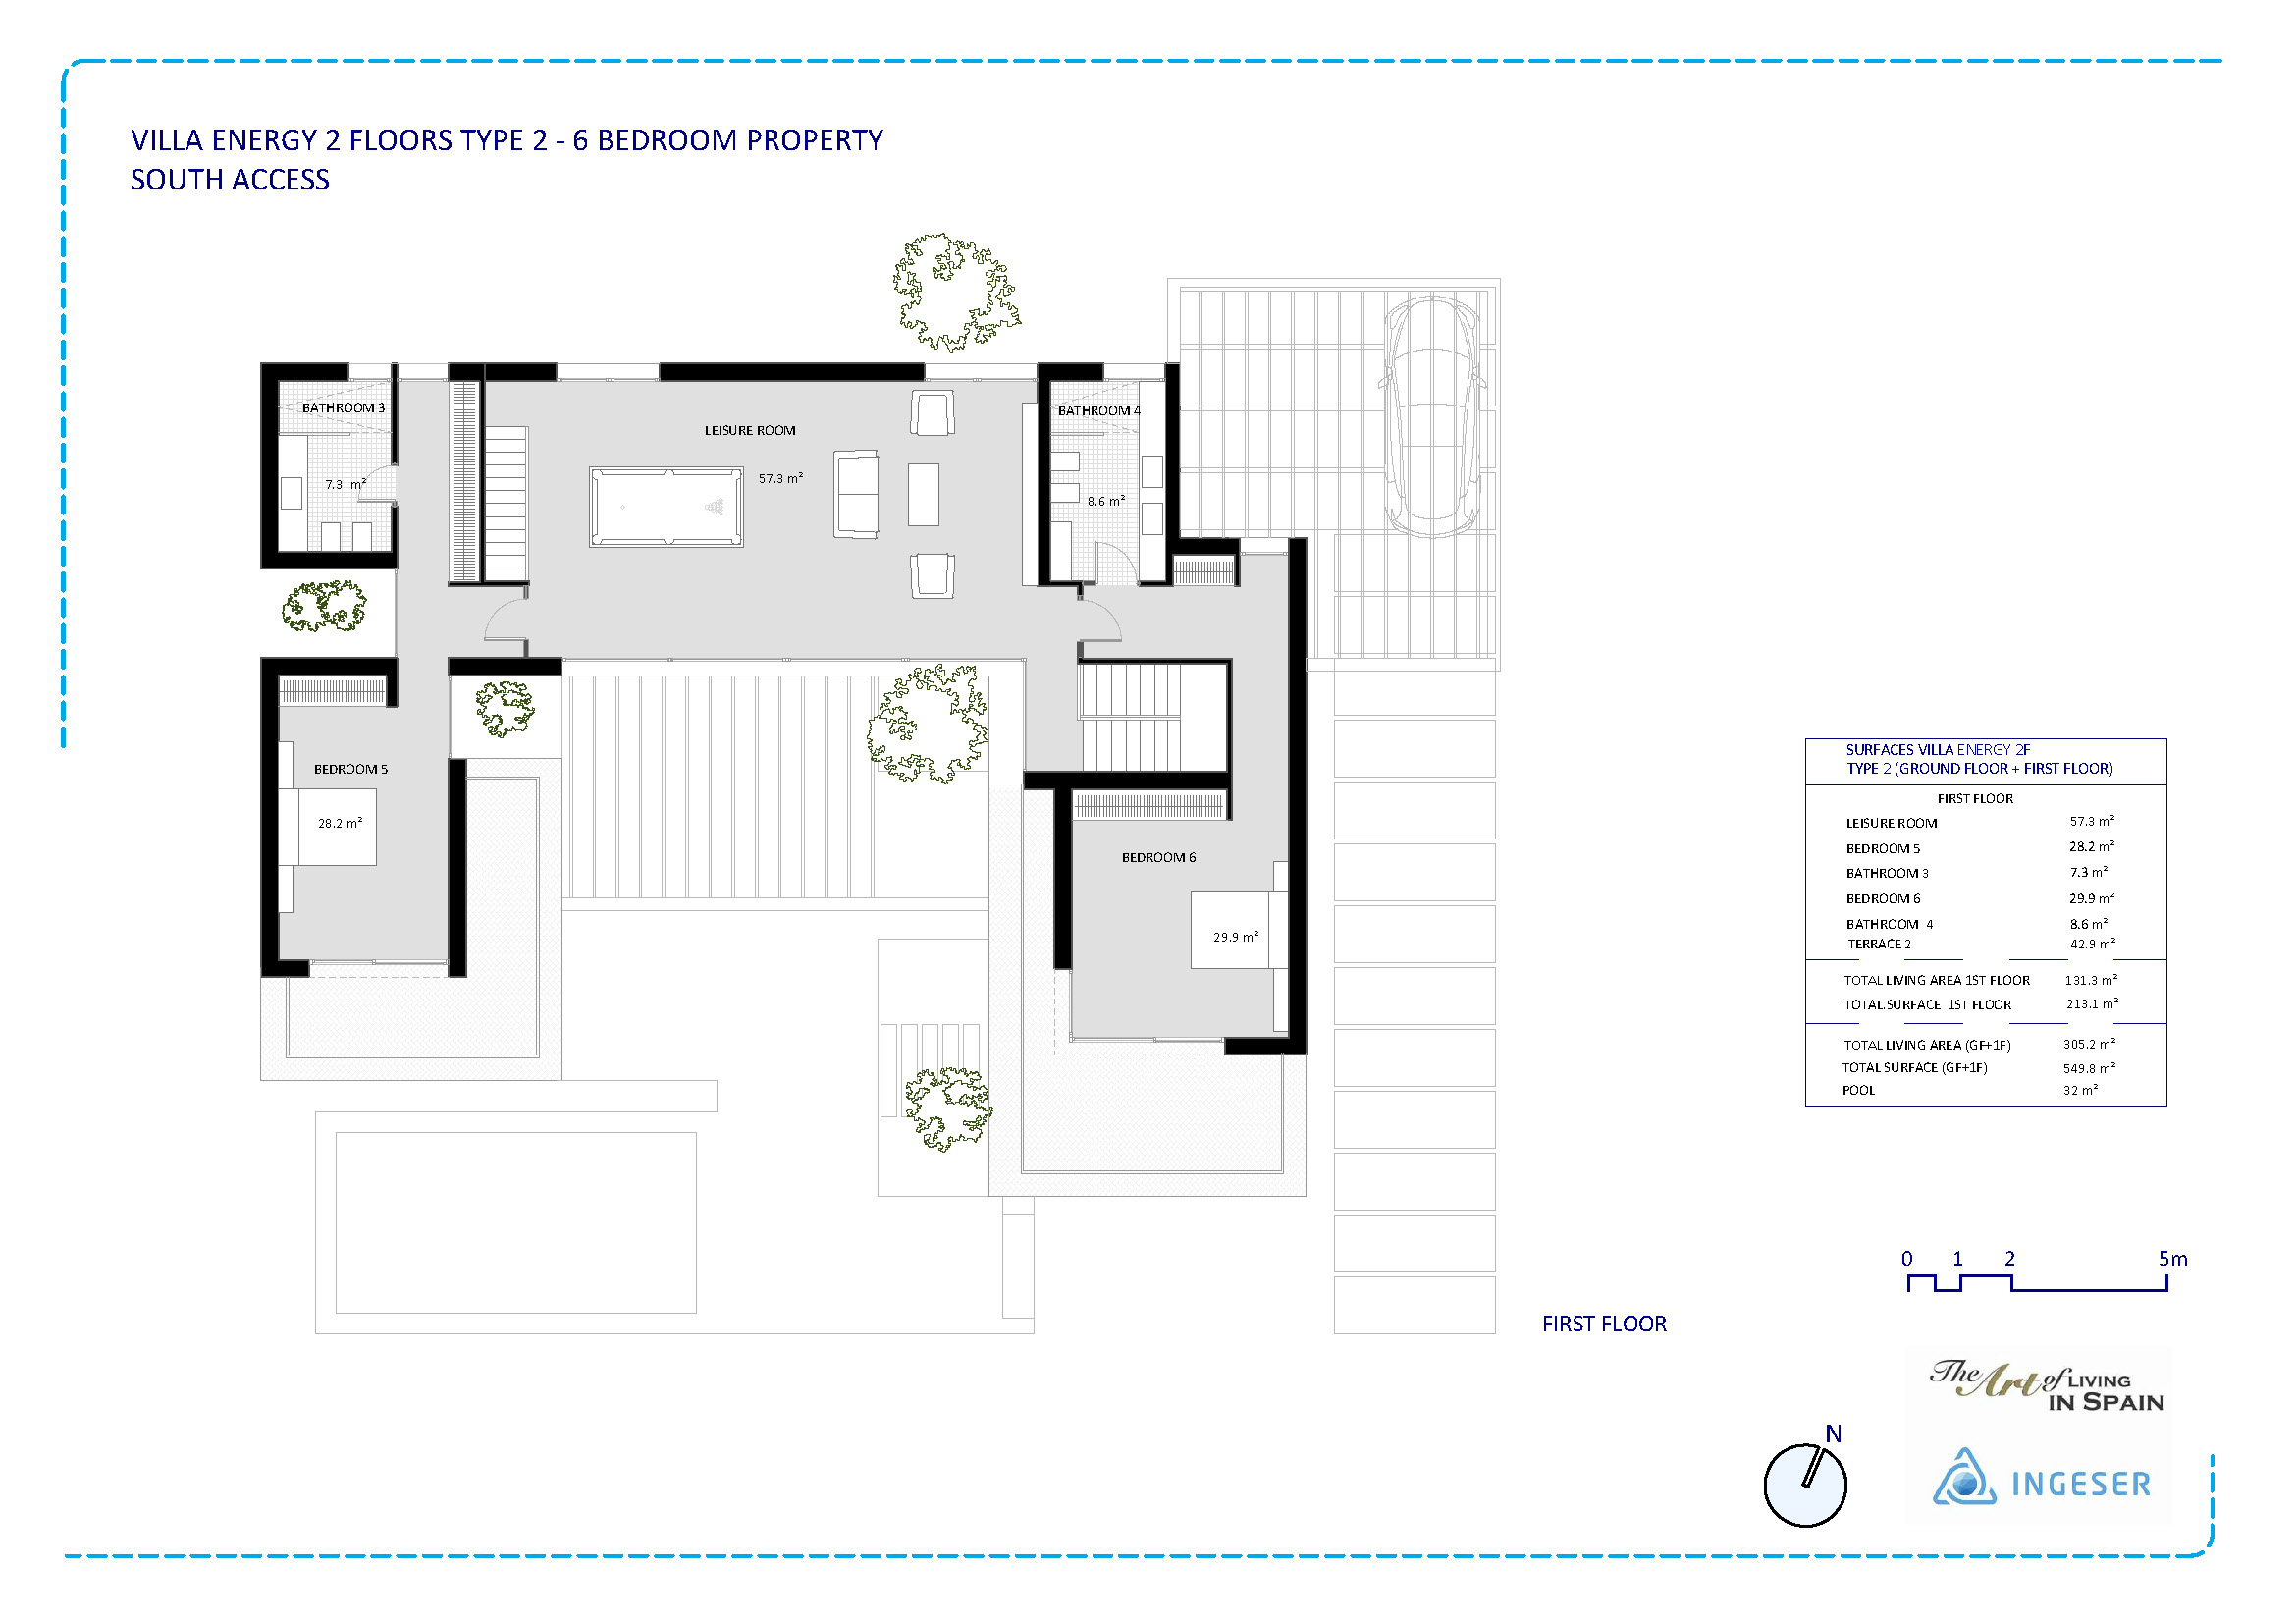 Energy 2 Floors Type II Upper Floor.pdf ENG